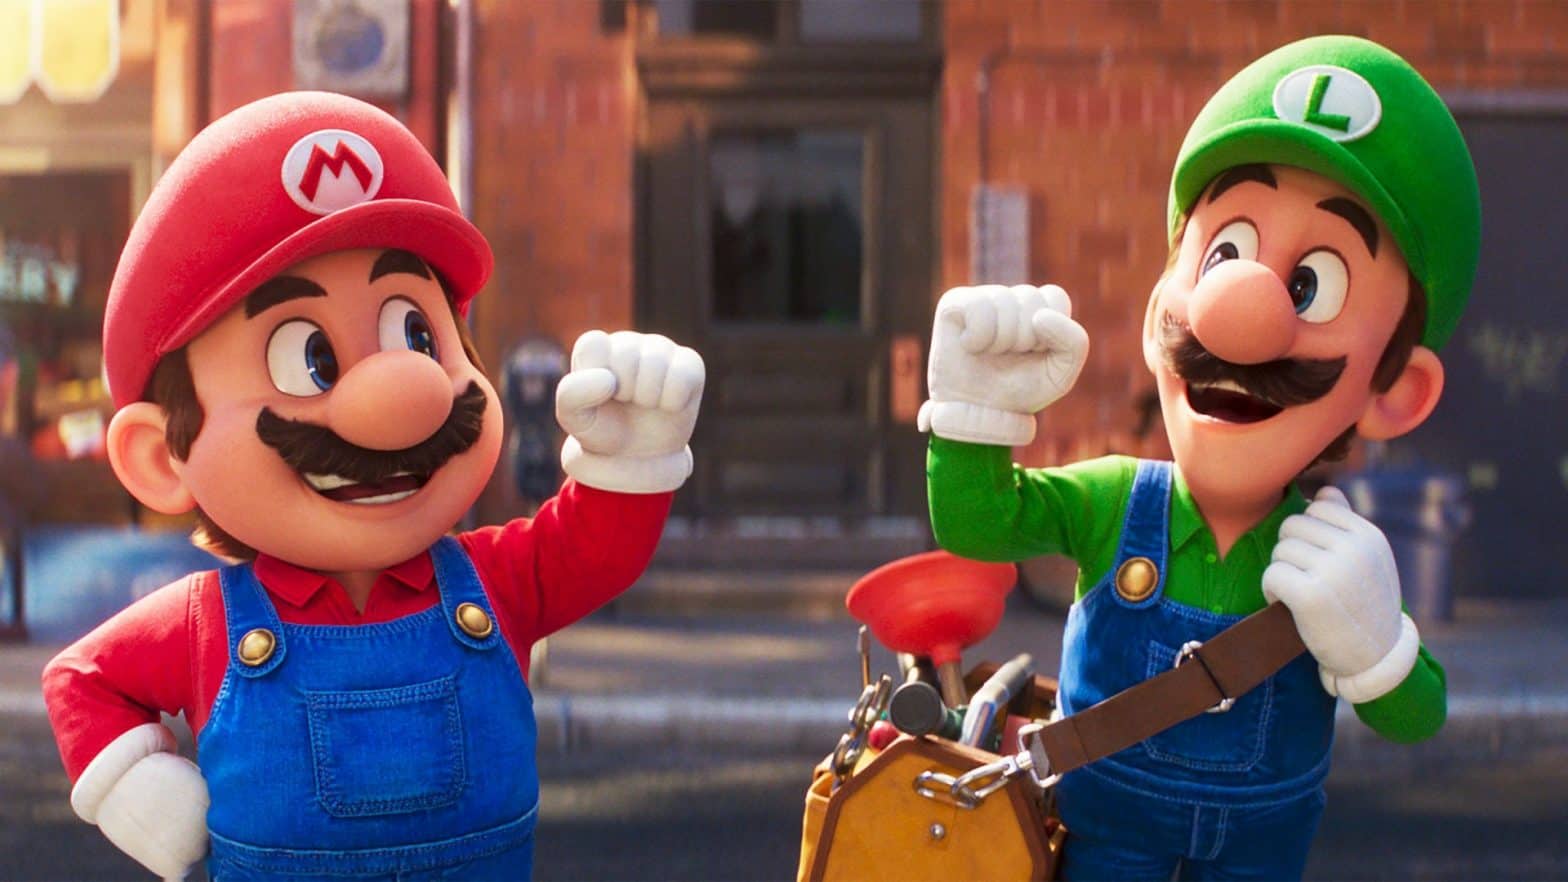 Mario with Luigi in The Super Mario Bros. Movie